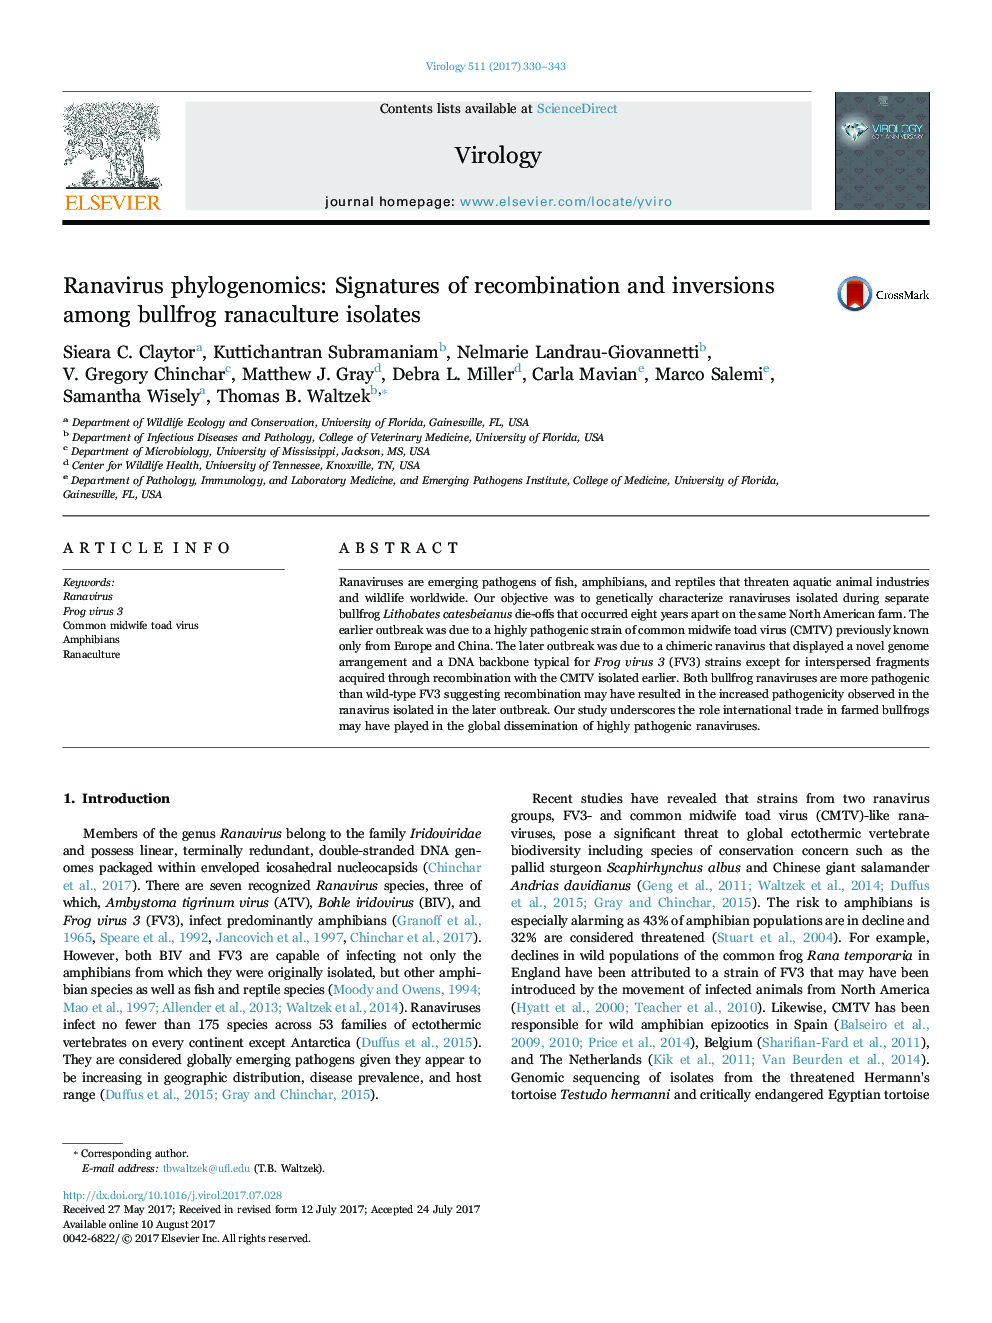 Ranavirus phylogenomics: Signatures of recombination and inversions among bullfrog ranaculture isolates